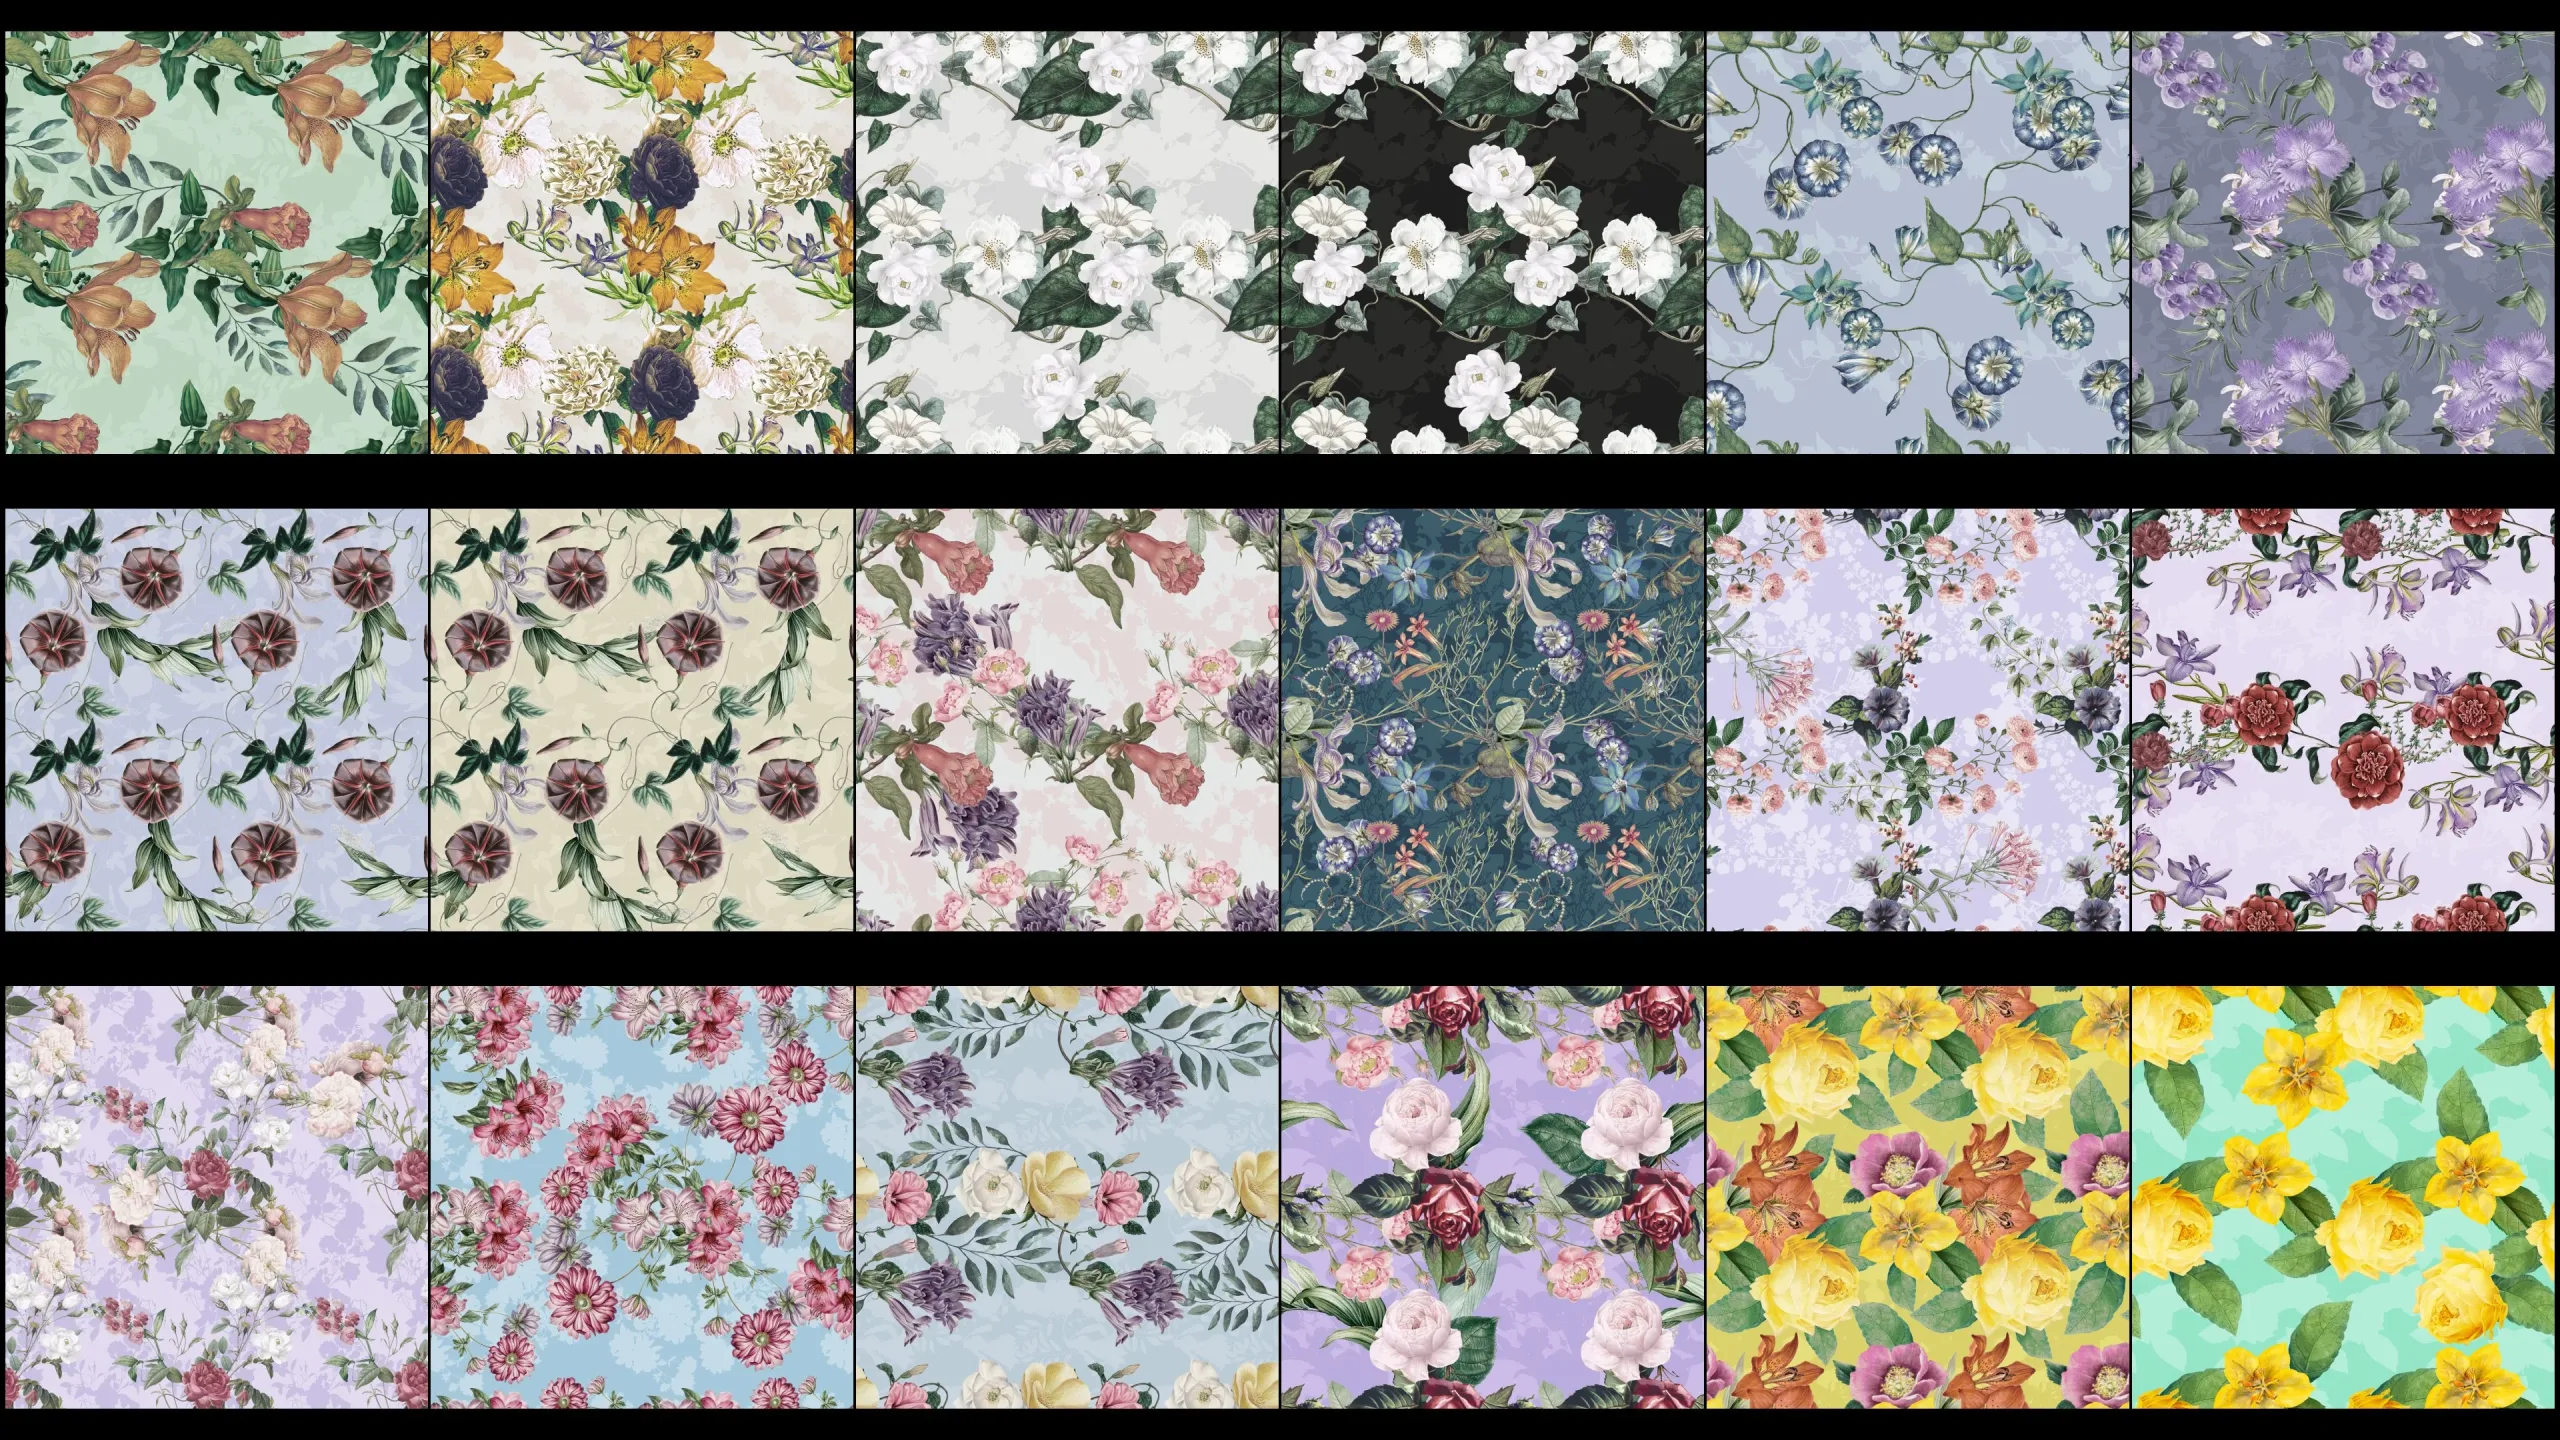 180+ 4K Seamless Floral and Botanical Textures